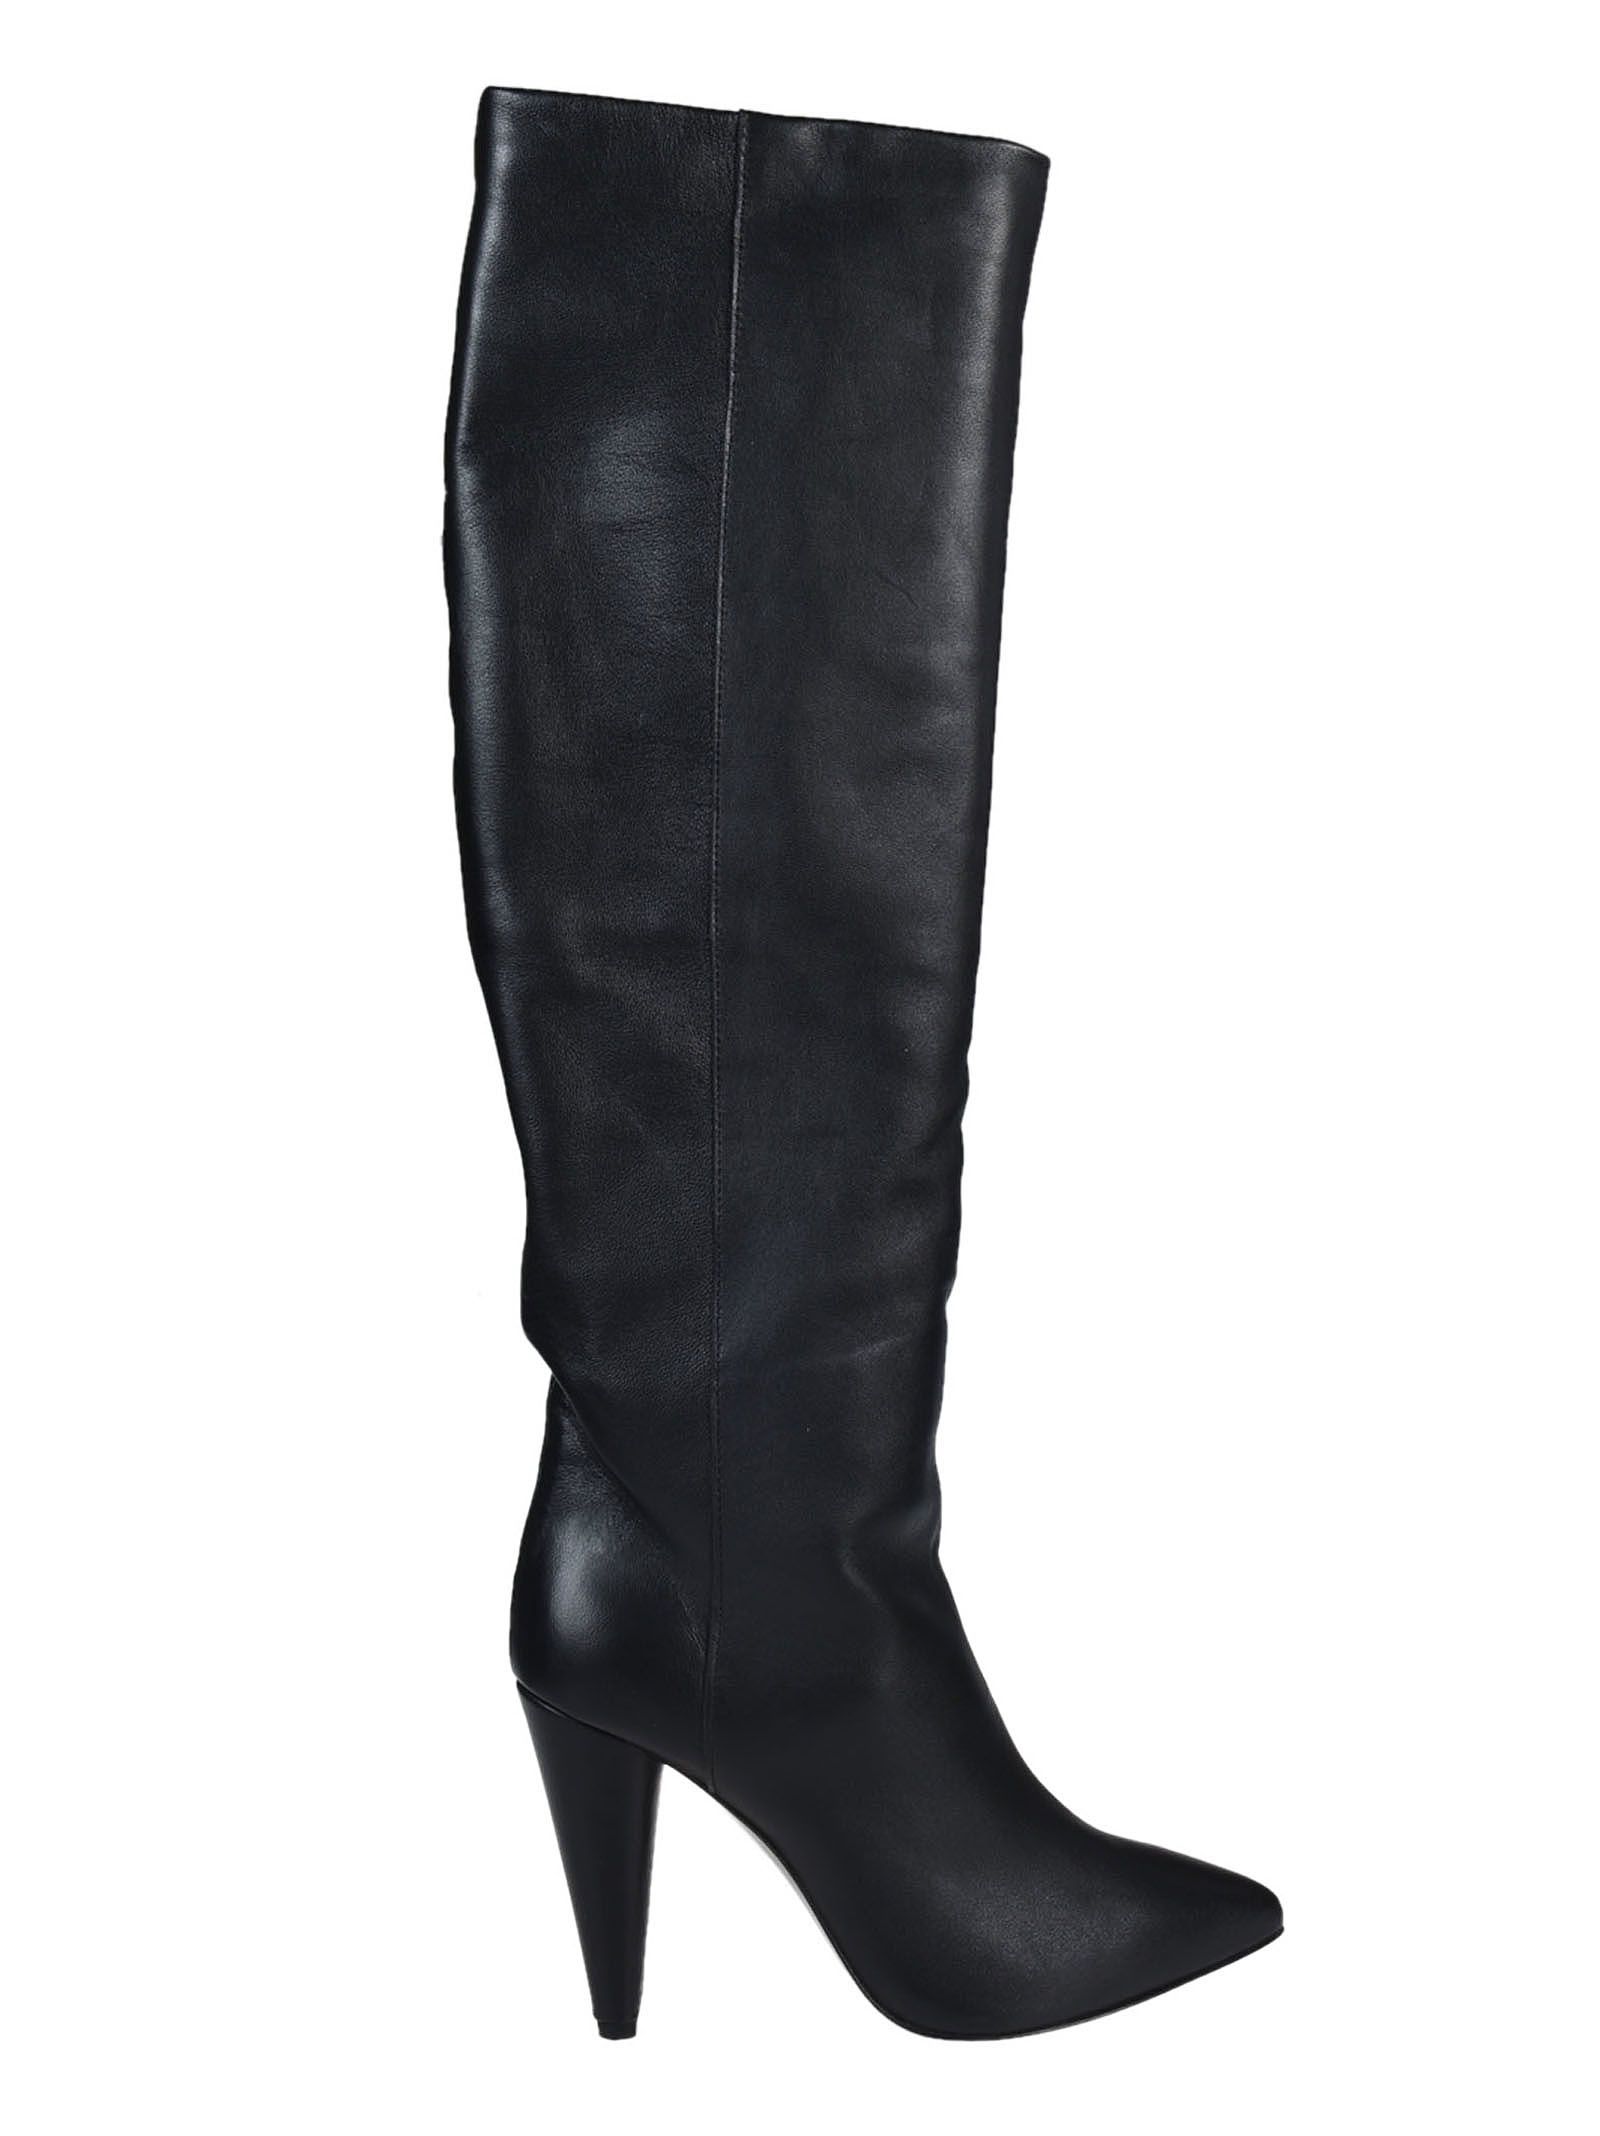 Erika Cavallini - Erika Cavallini Cone Heel Over-The-Knee Boots - Black ...